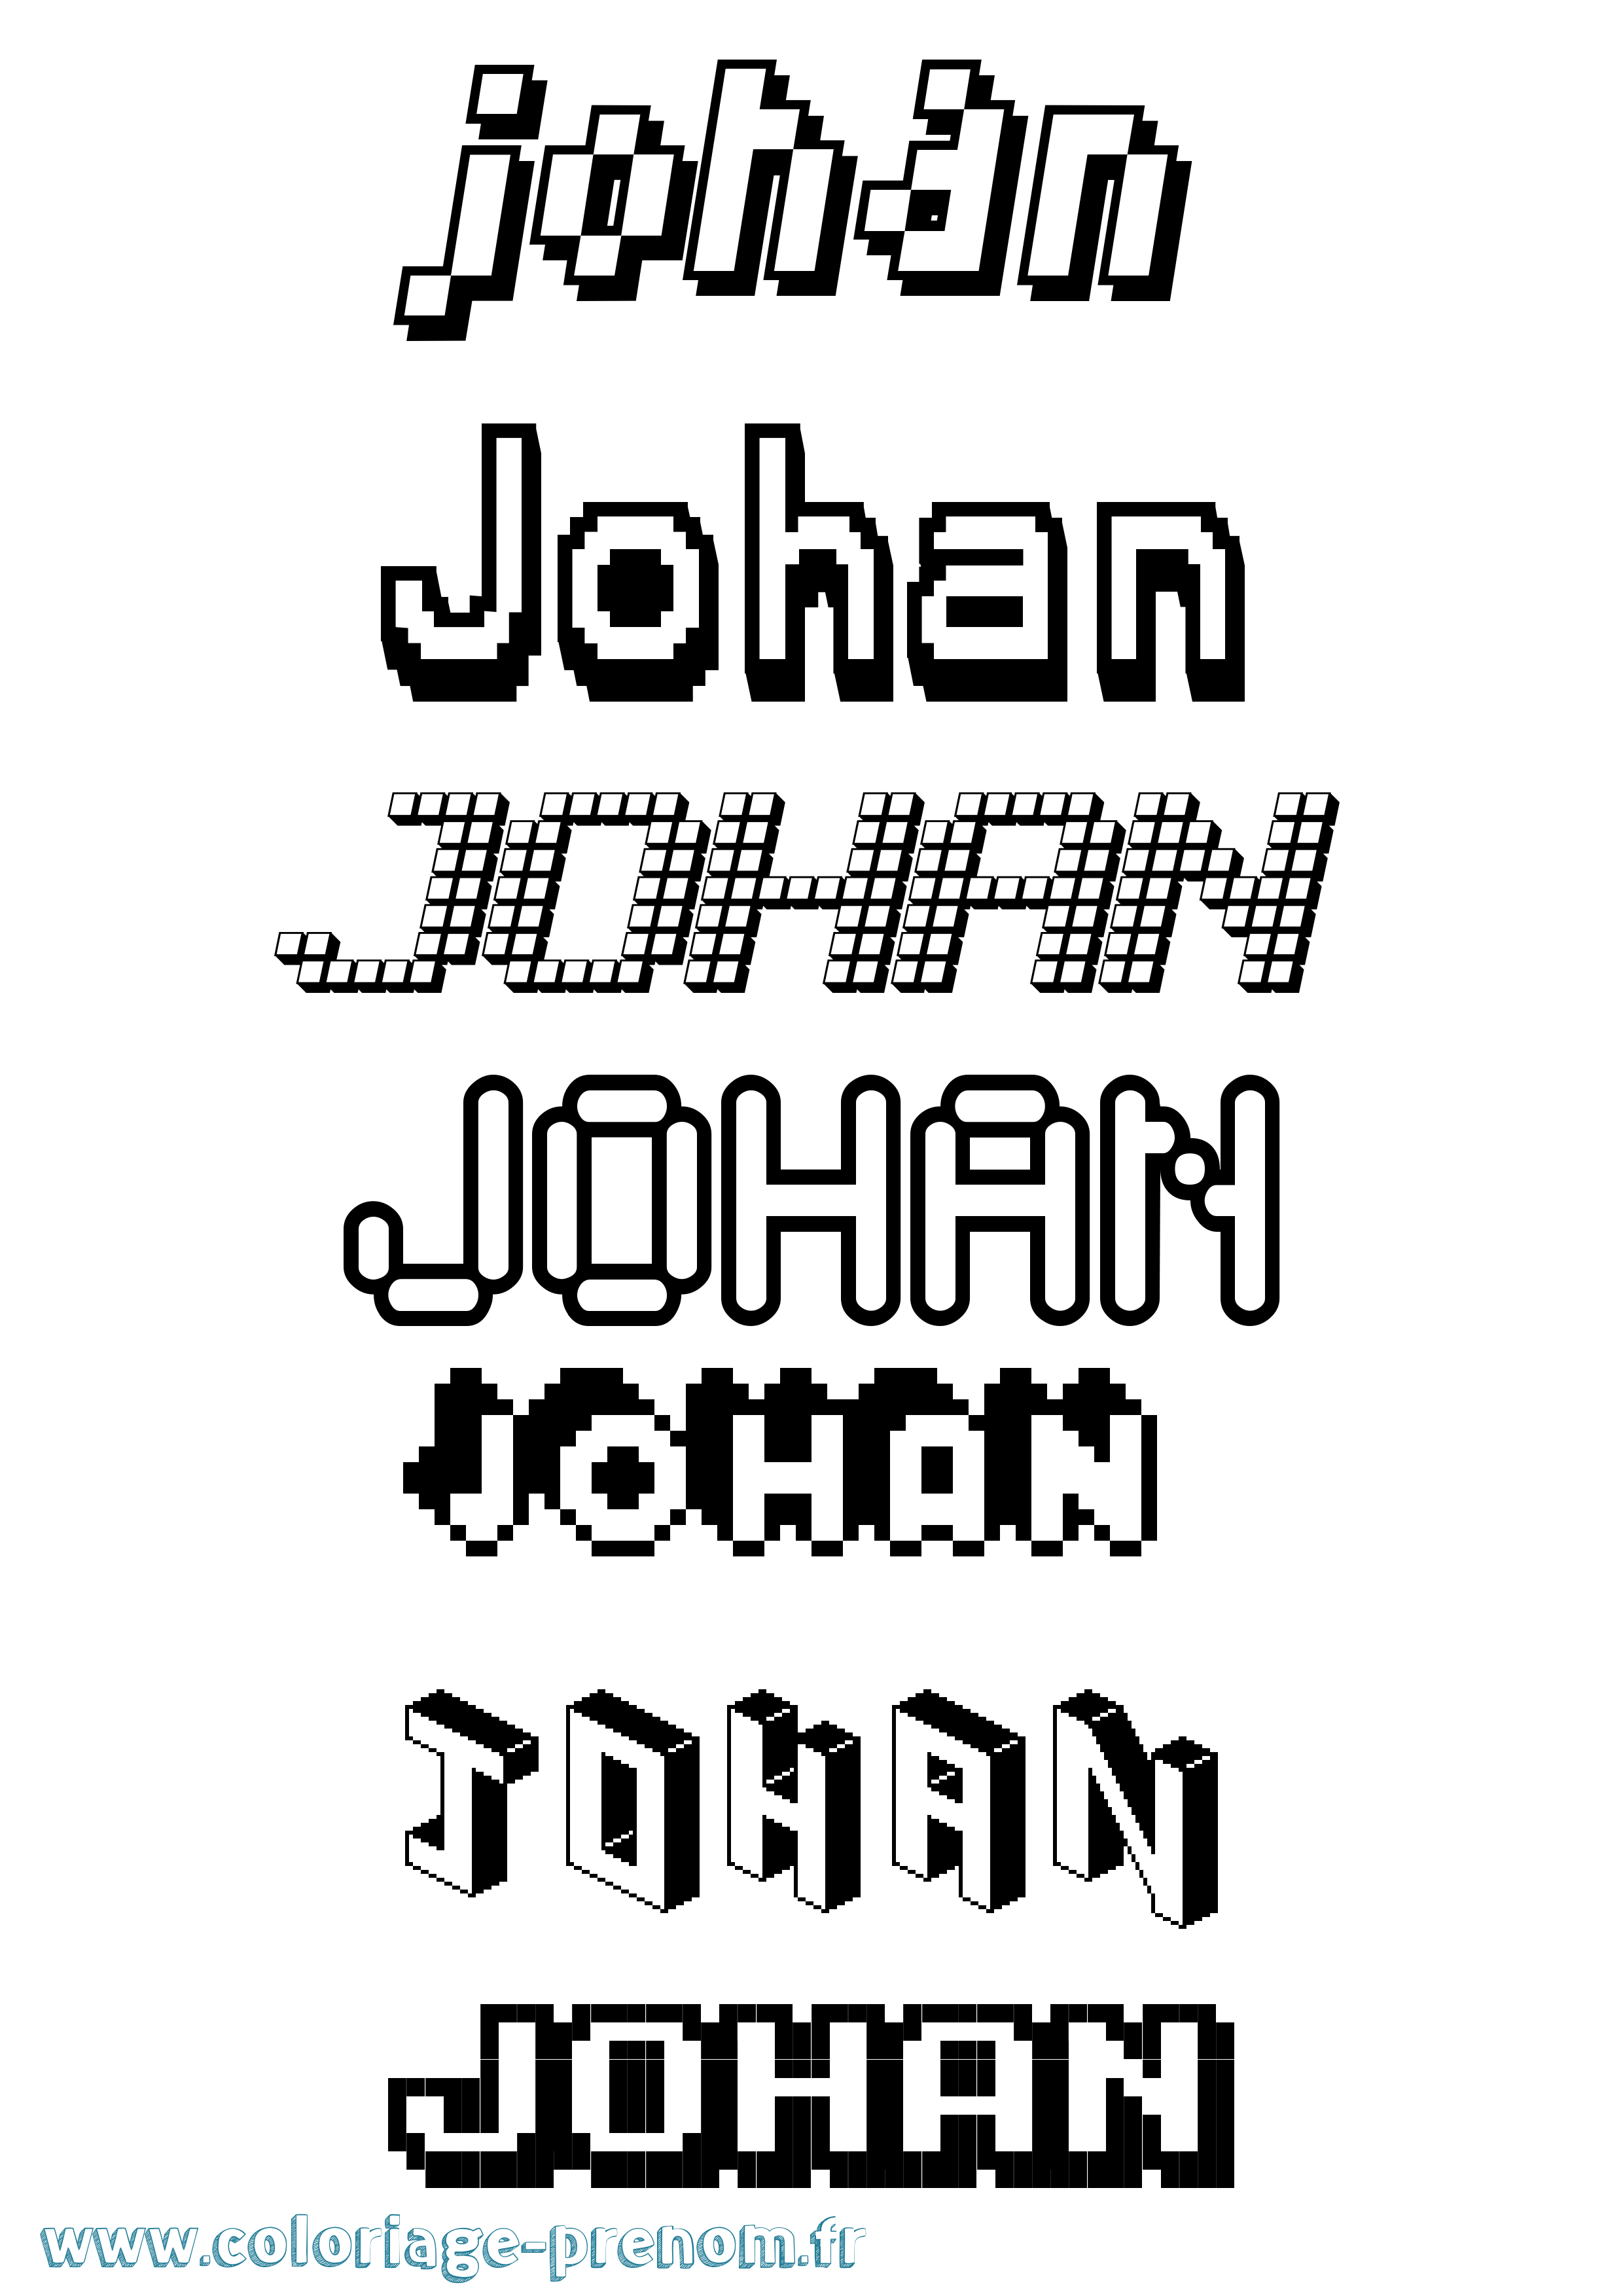 Coloriage prénom Johan Pixel